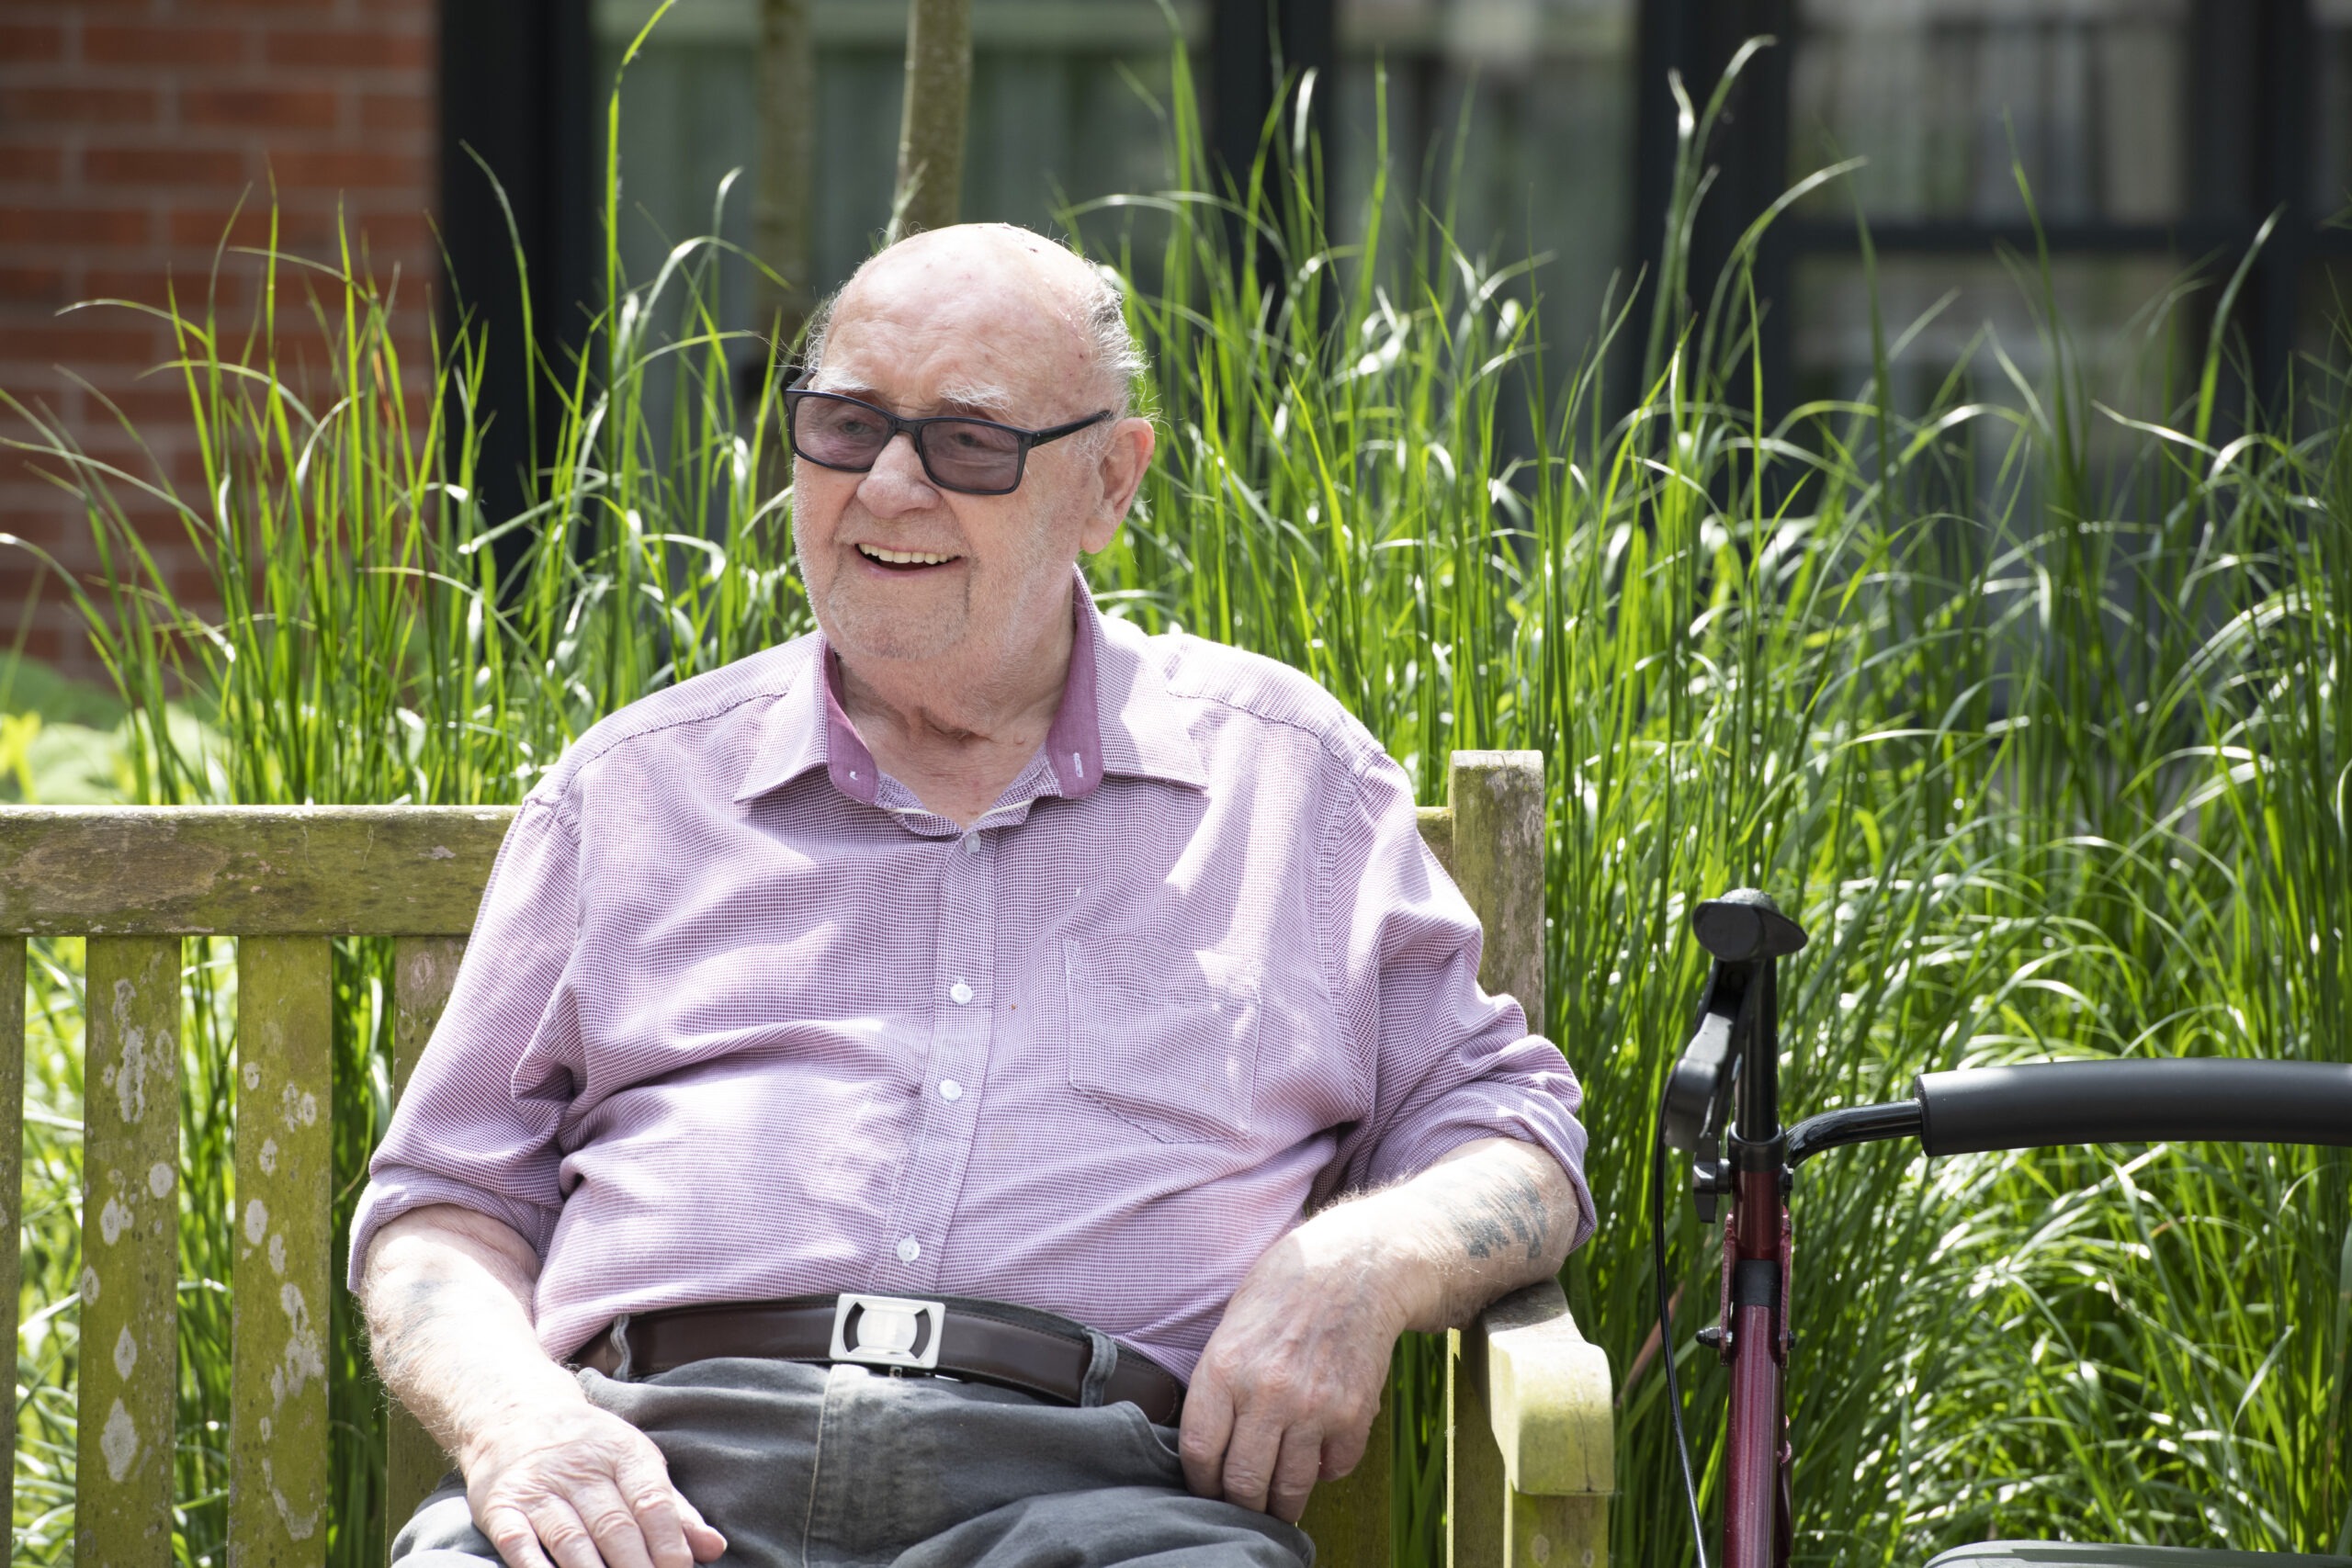 Elderly man sat on a bench